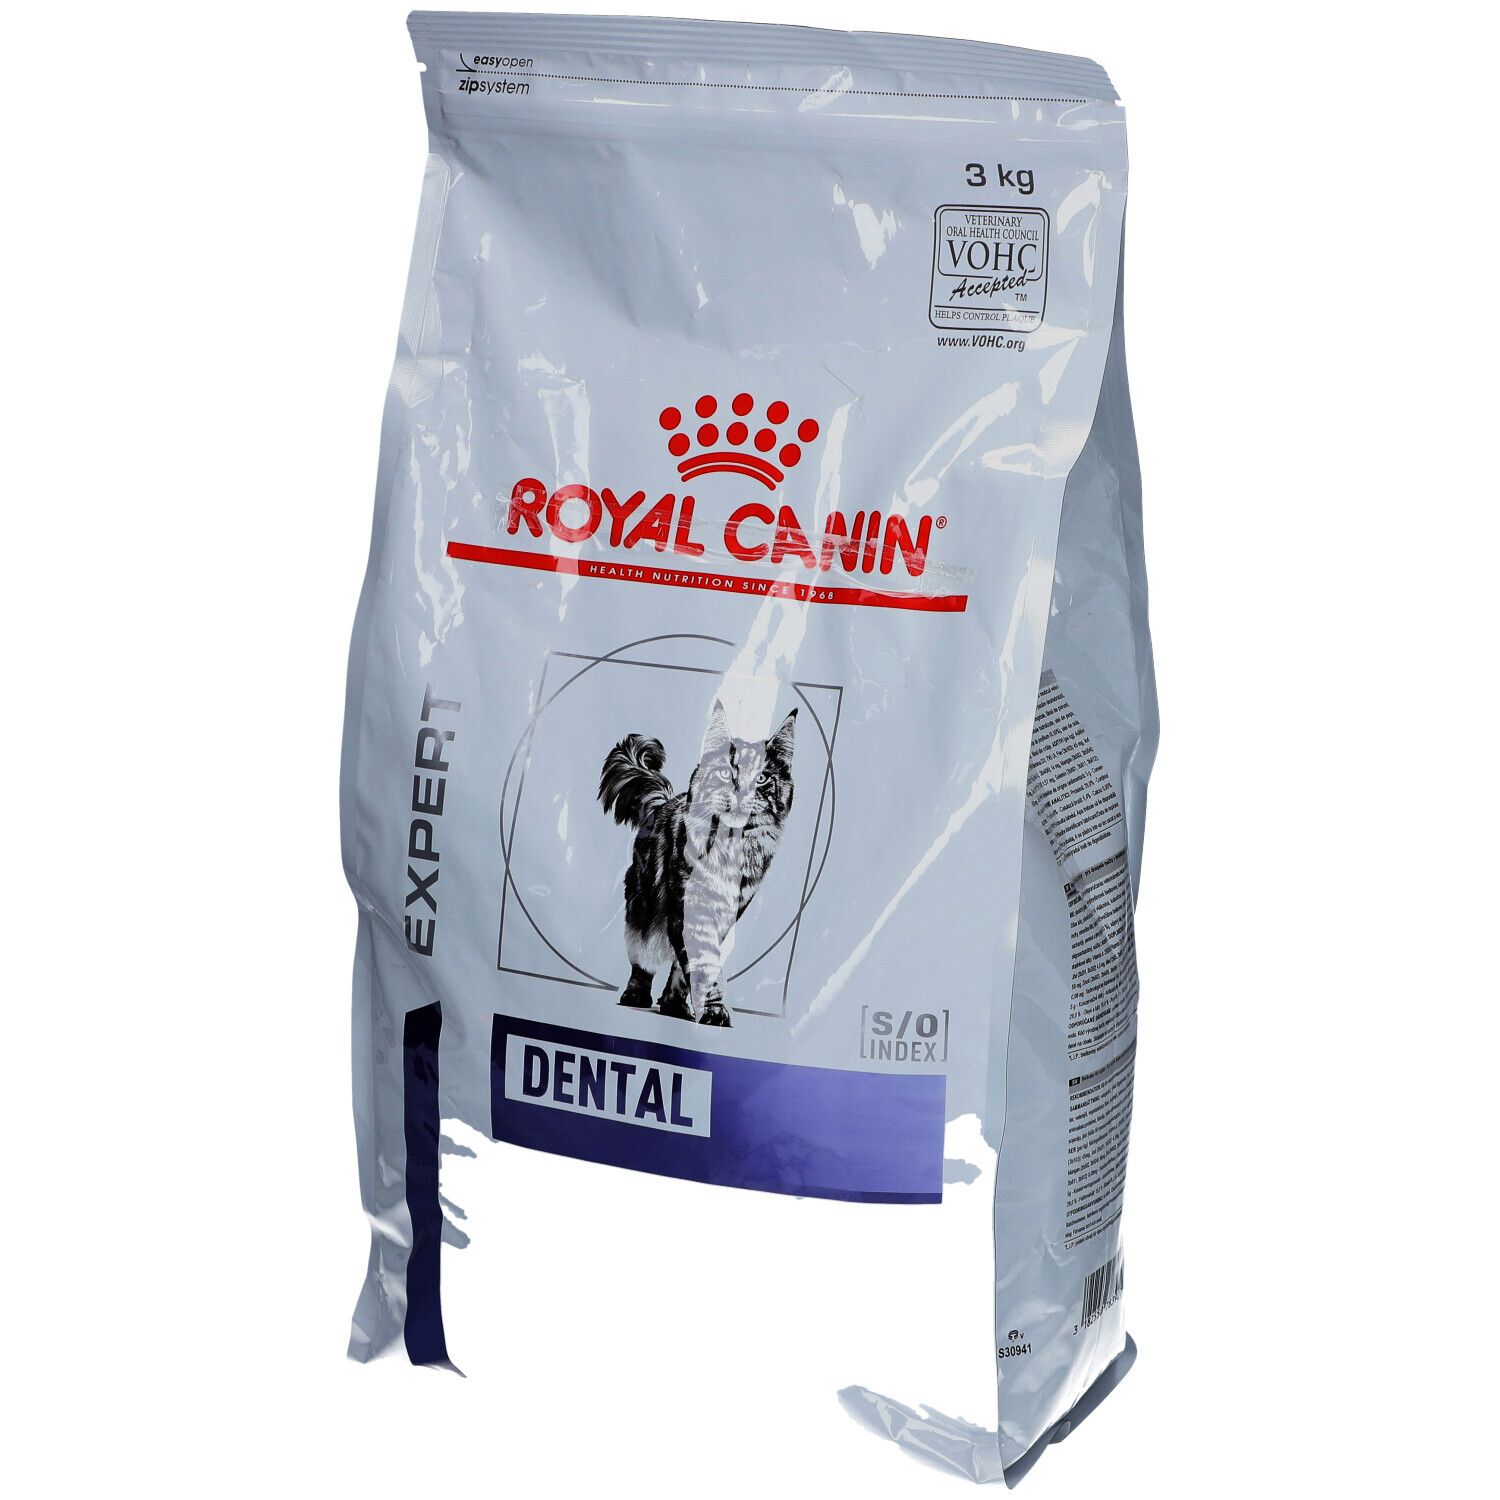 Royal Canin® Veterinary Dental